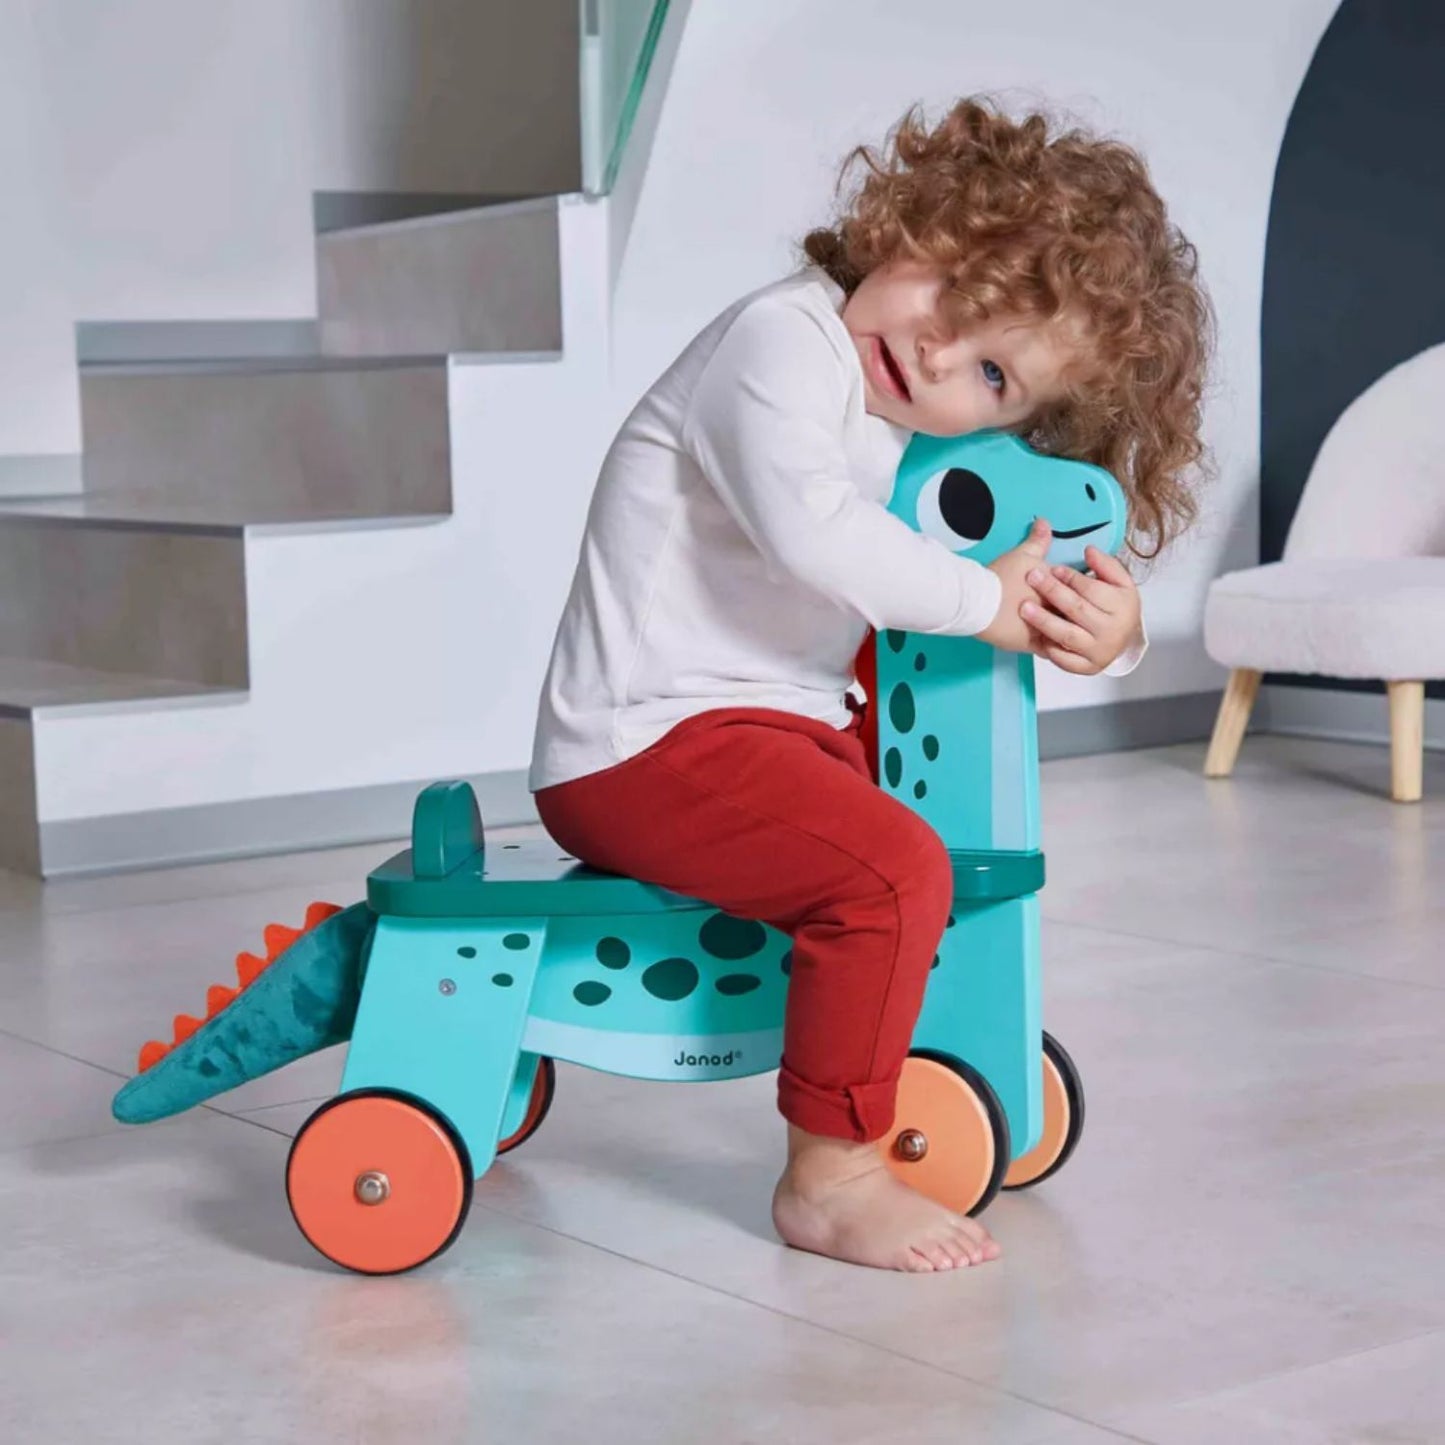 Ride-on Dino Portosaurus | Baby & Toddler Activity Wooden Toy